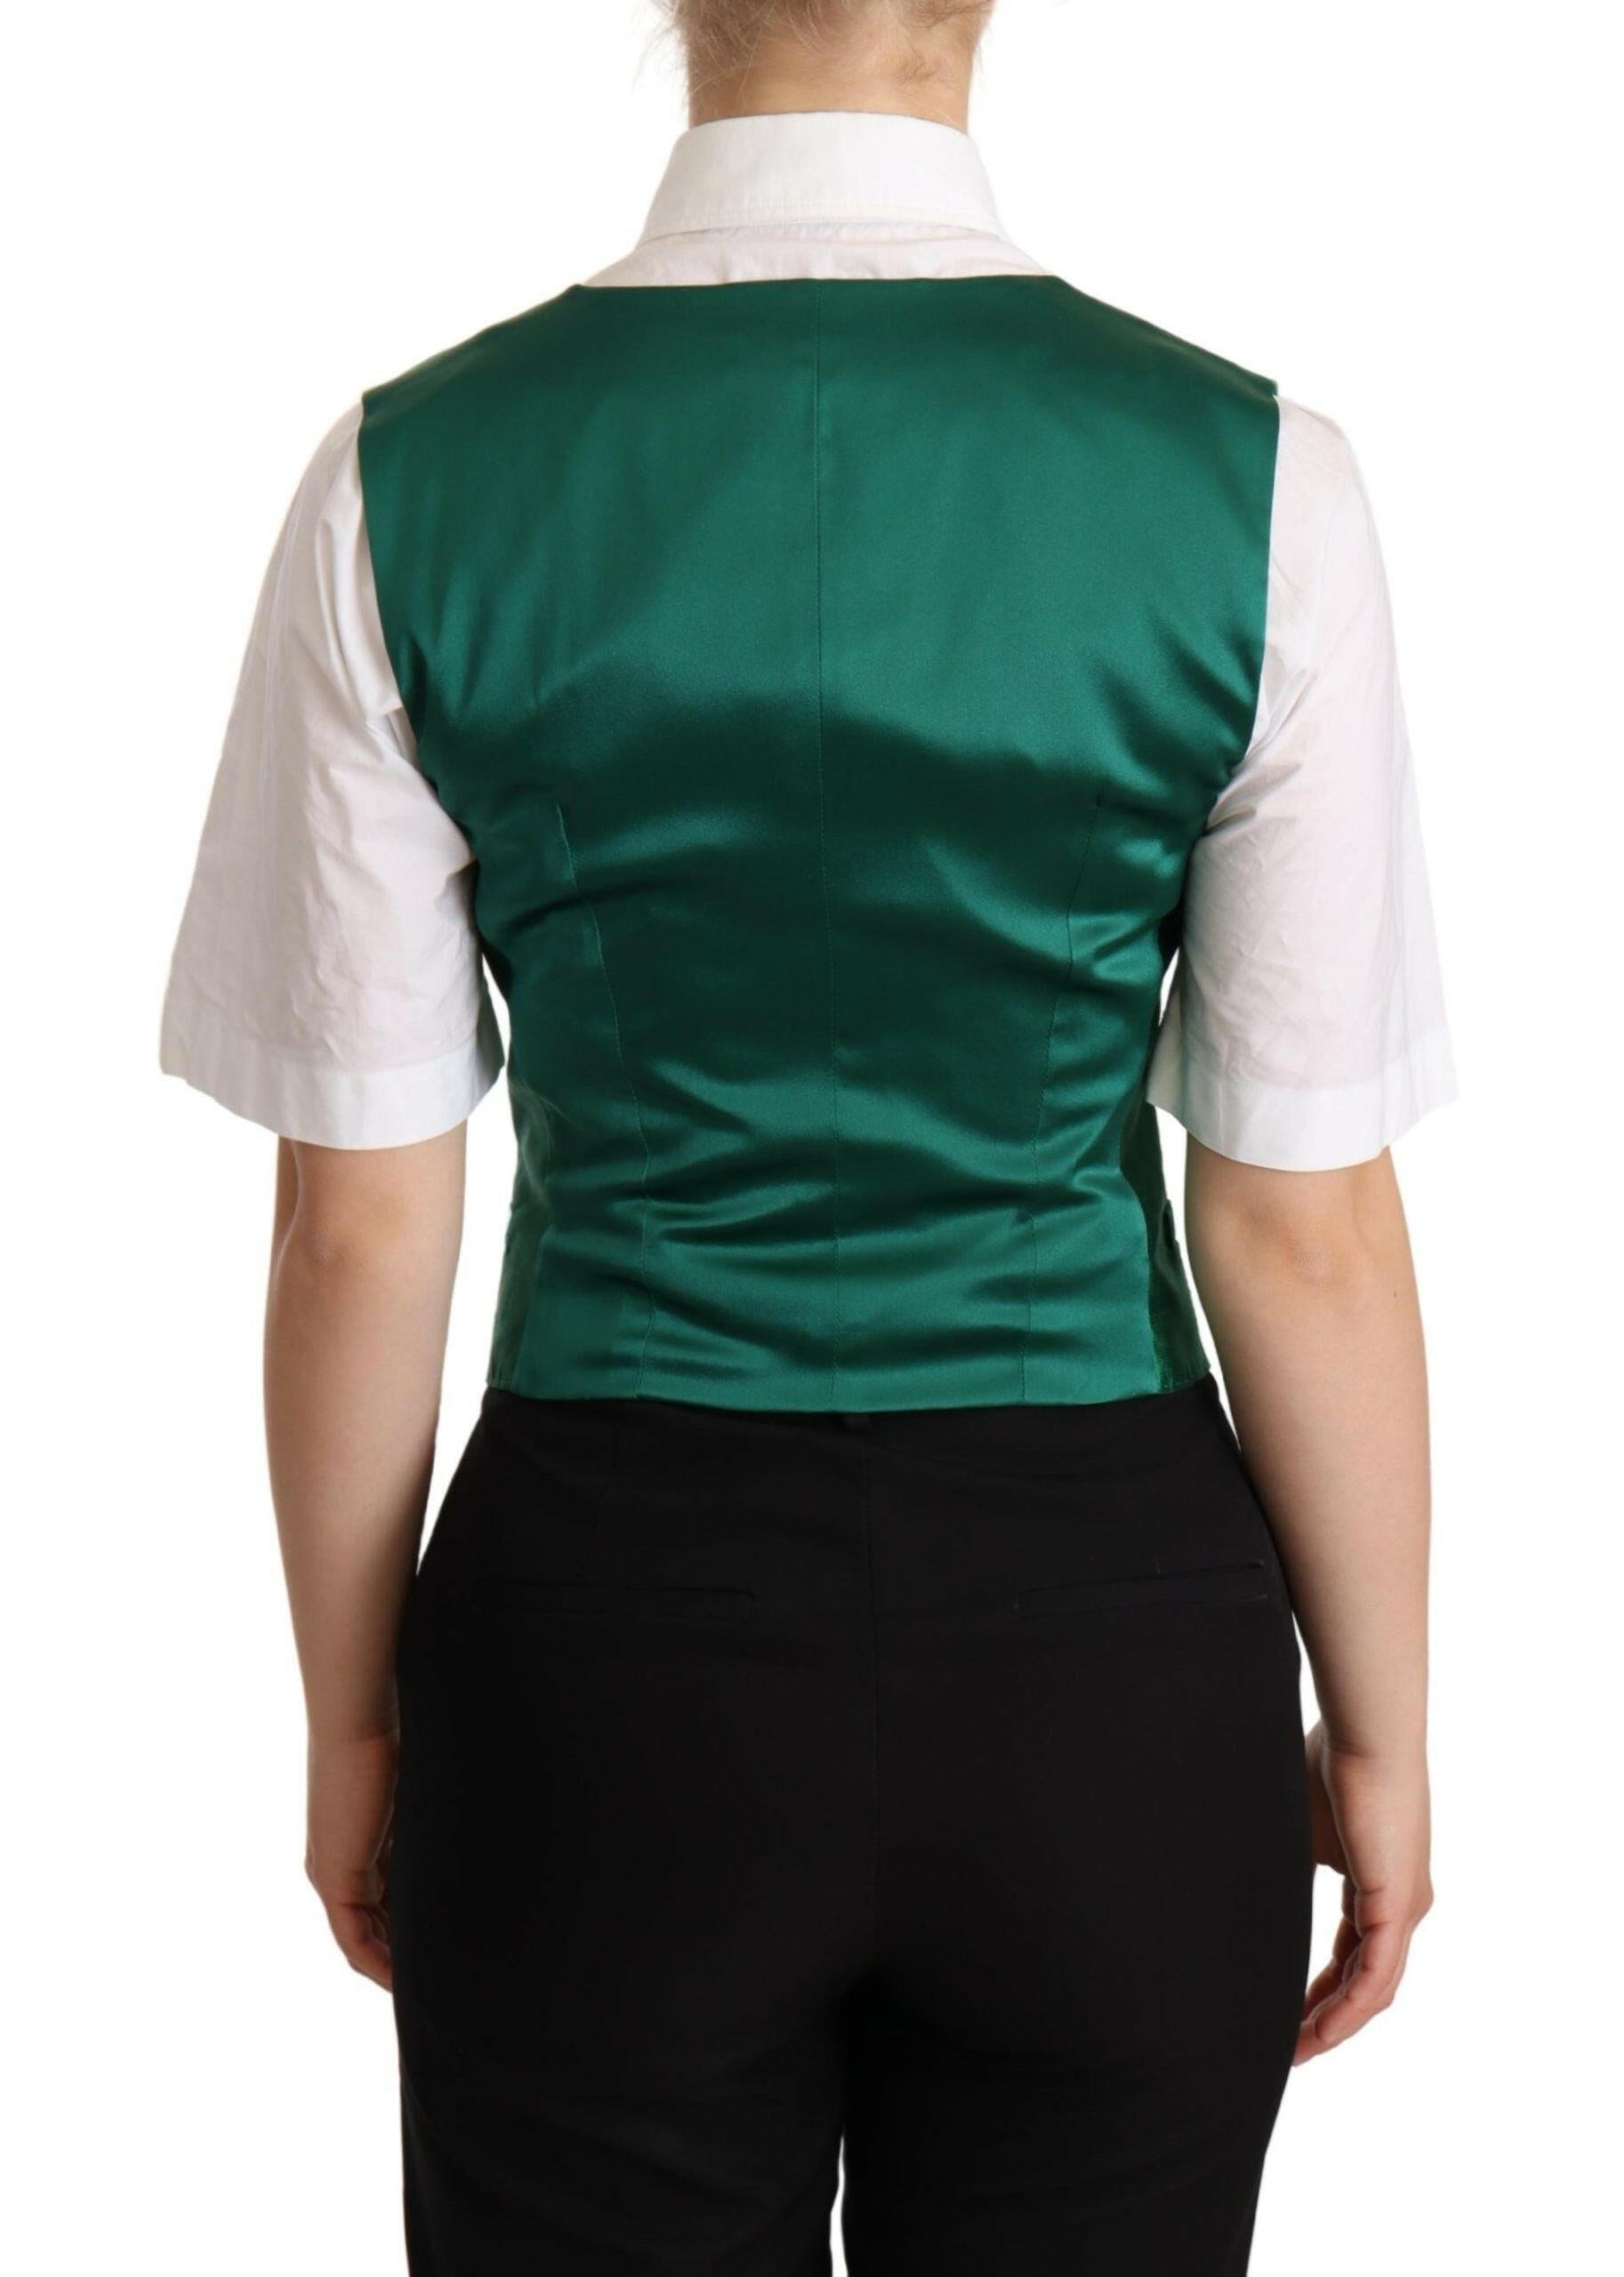 Dolce & Gabbana Green Silk Satin Sleeveless Waistcoat Vest - GENUINE AUTHENTIC BRAND LLC  